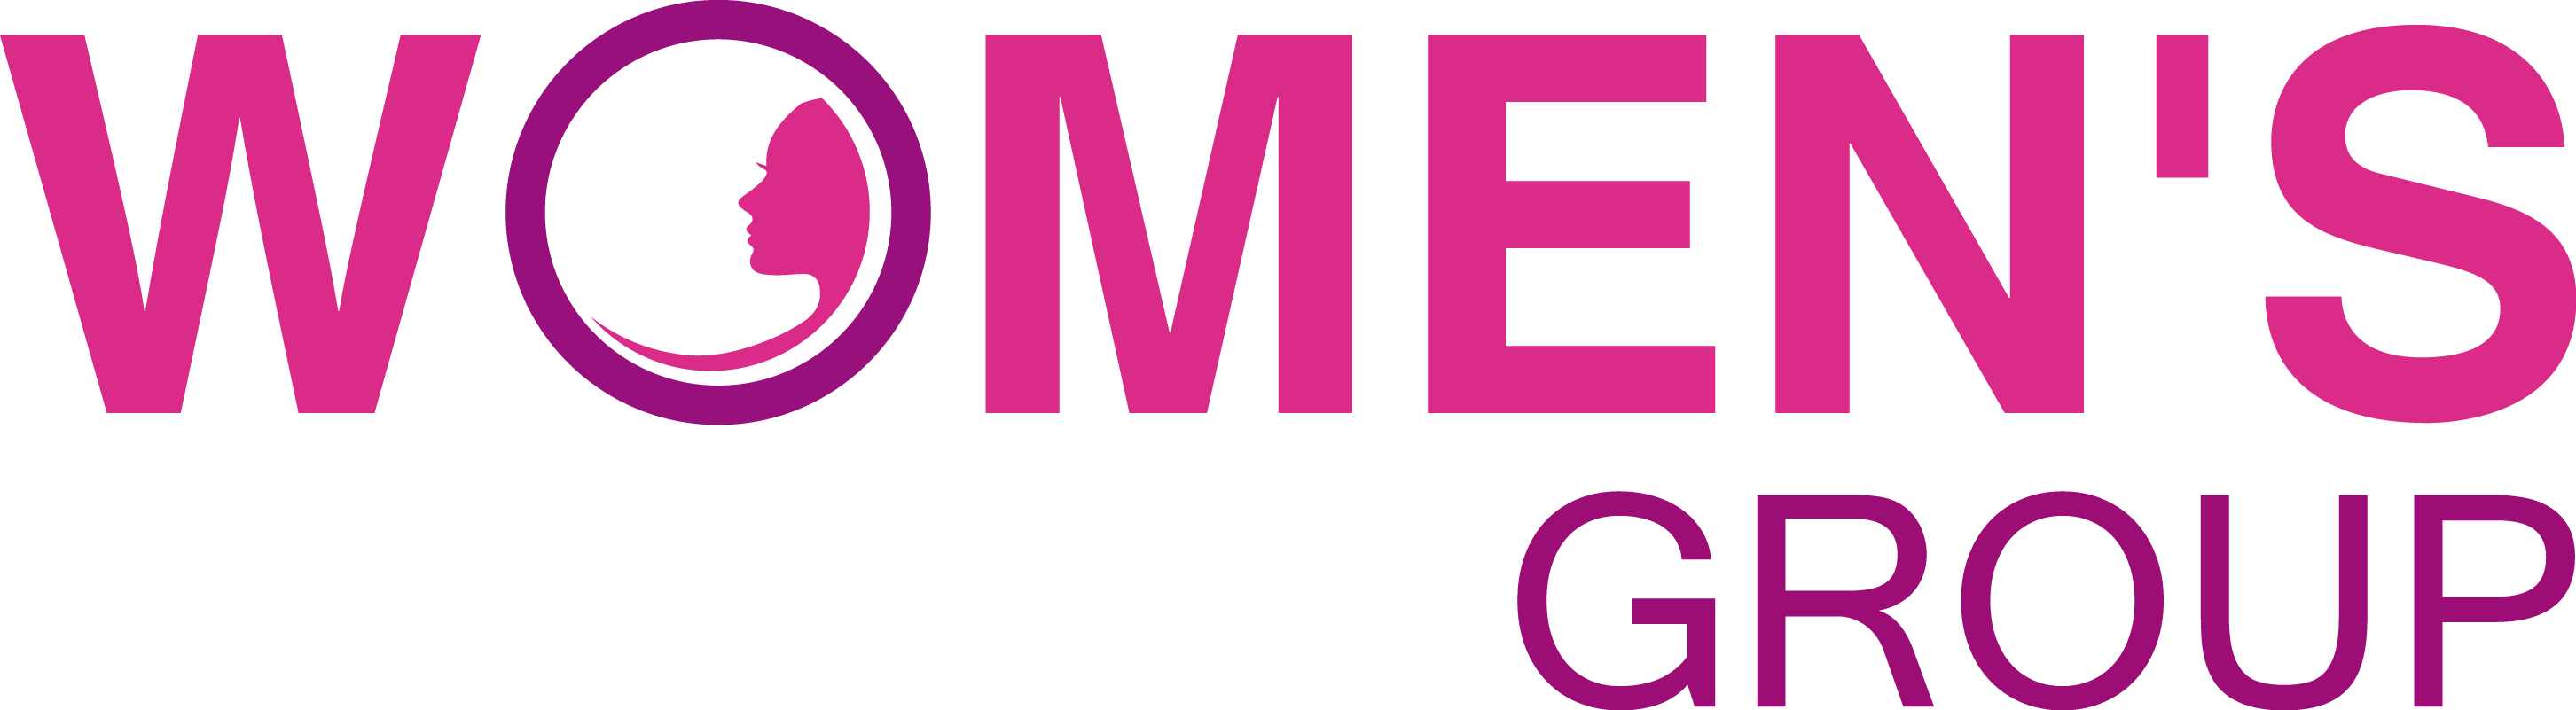 Womens Group Logo Pinkand Gray PNG